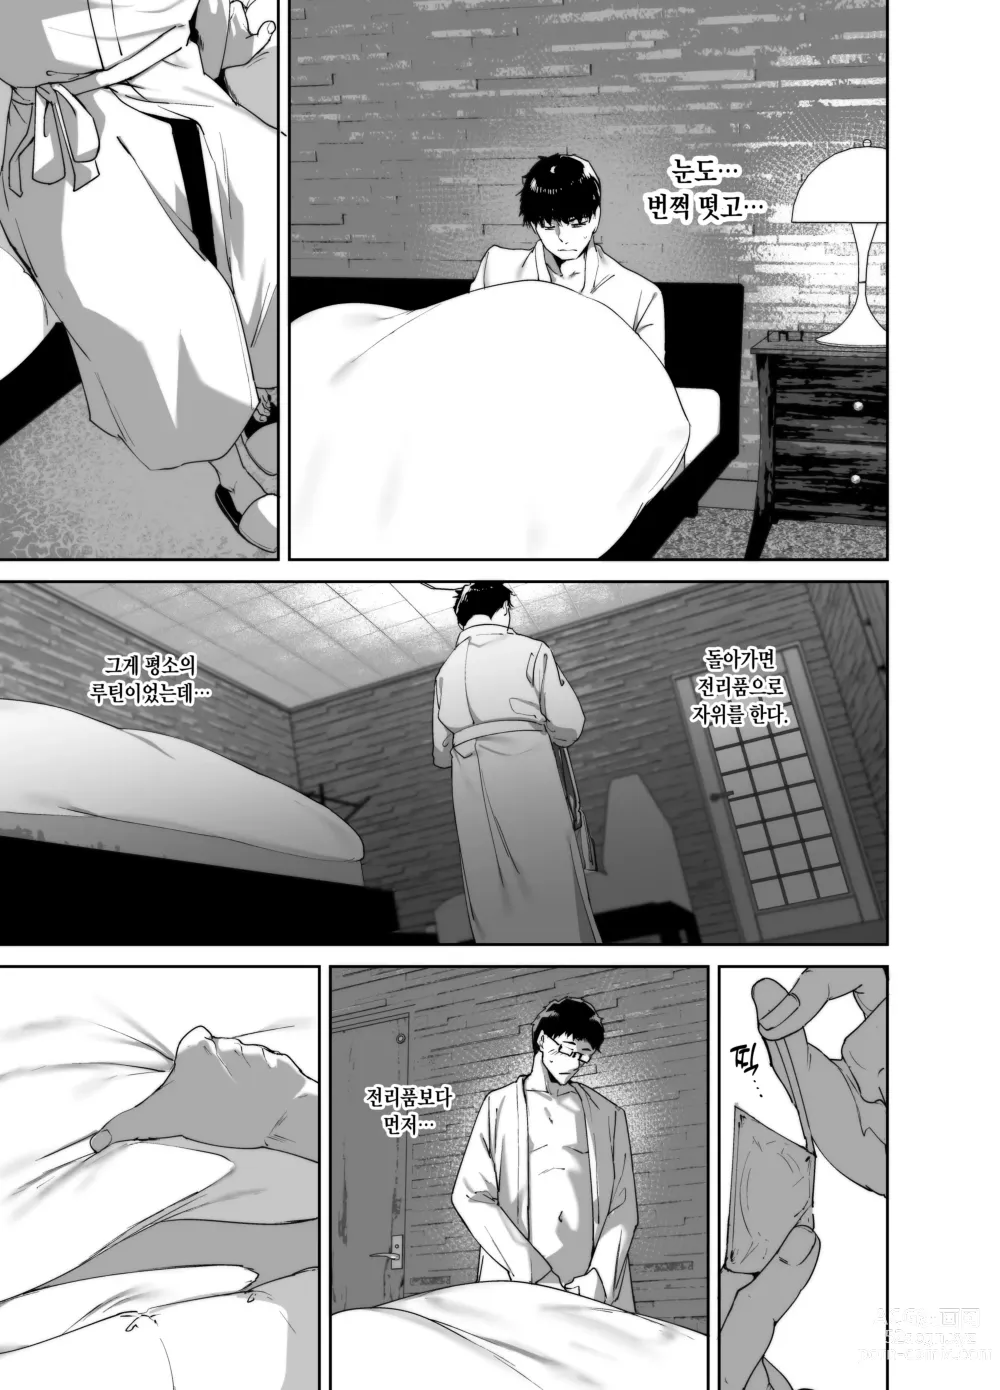 Page 11 of doujinshi 오타쿠 친구랑 하는 섹스는 최고로 기분 좋다2